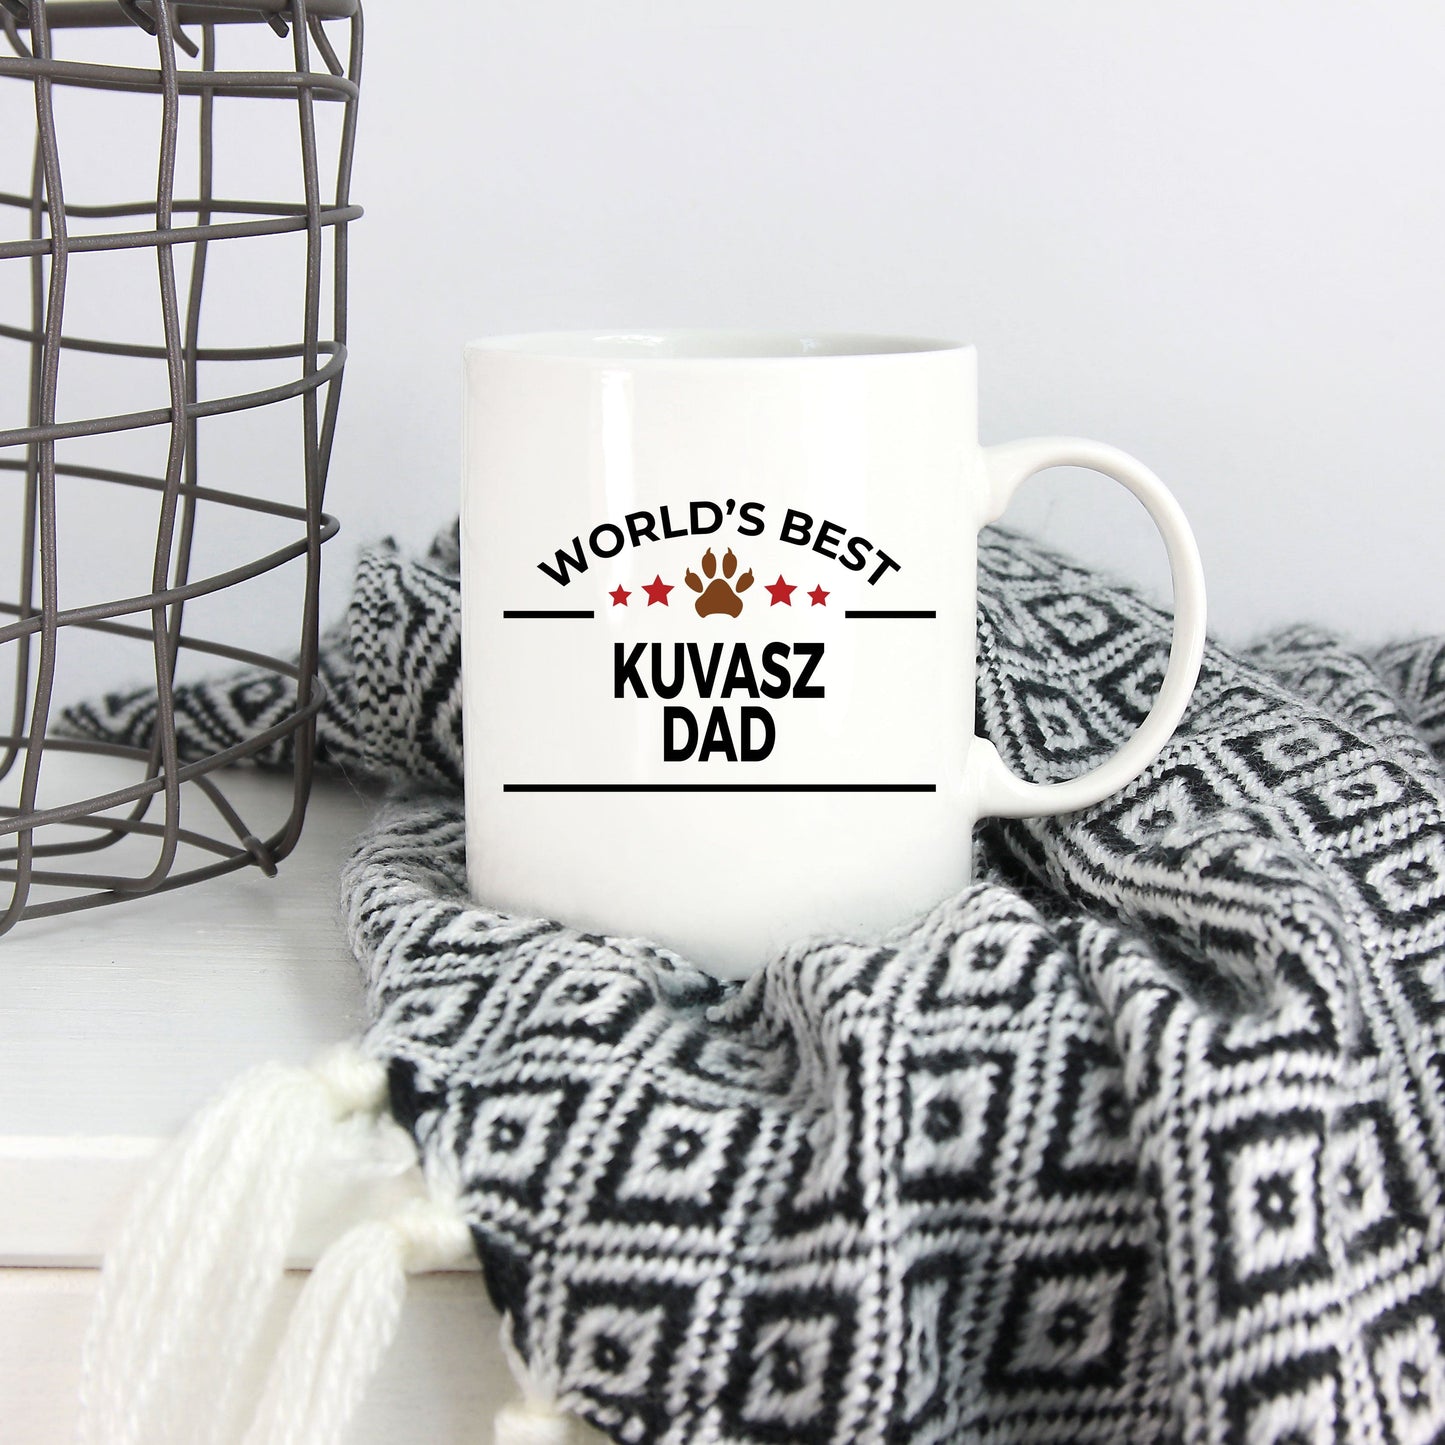 Kuvasz Dog Lover Gift World's Best Dad Birthday Father's Day White Ceramic Coffee Mug